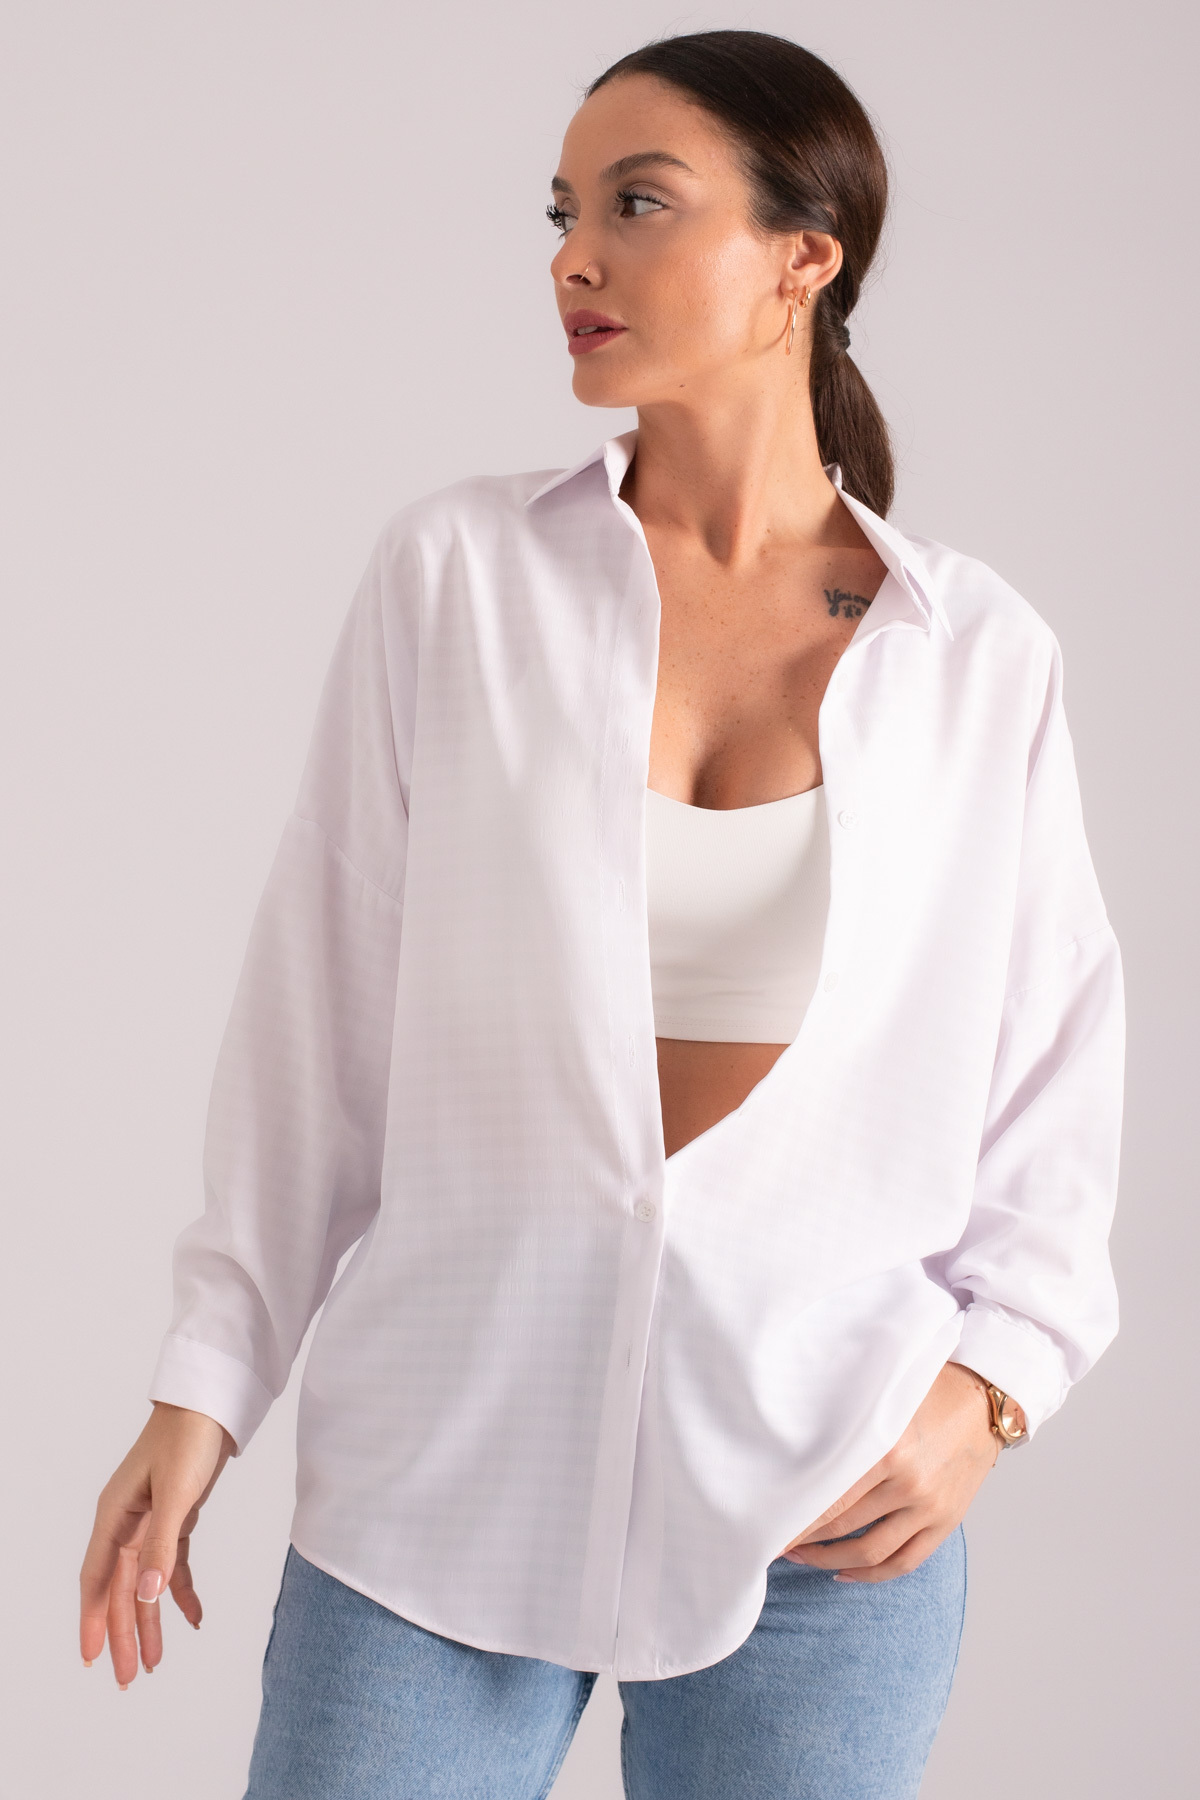 armonika Women's White Square Pattern Oversize Long Basic Shirt